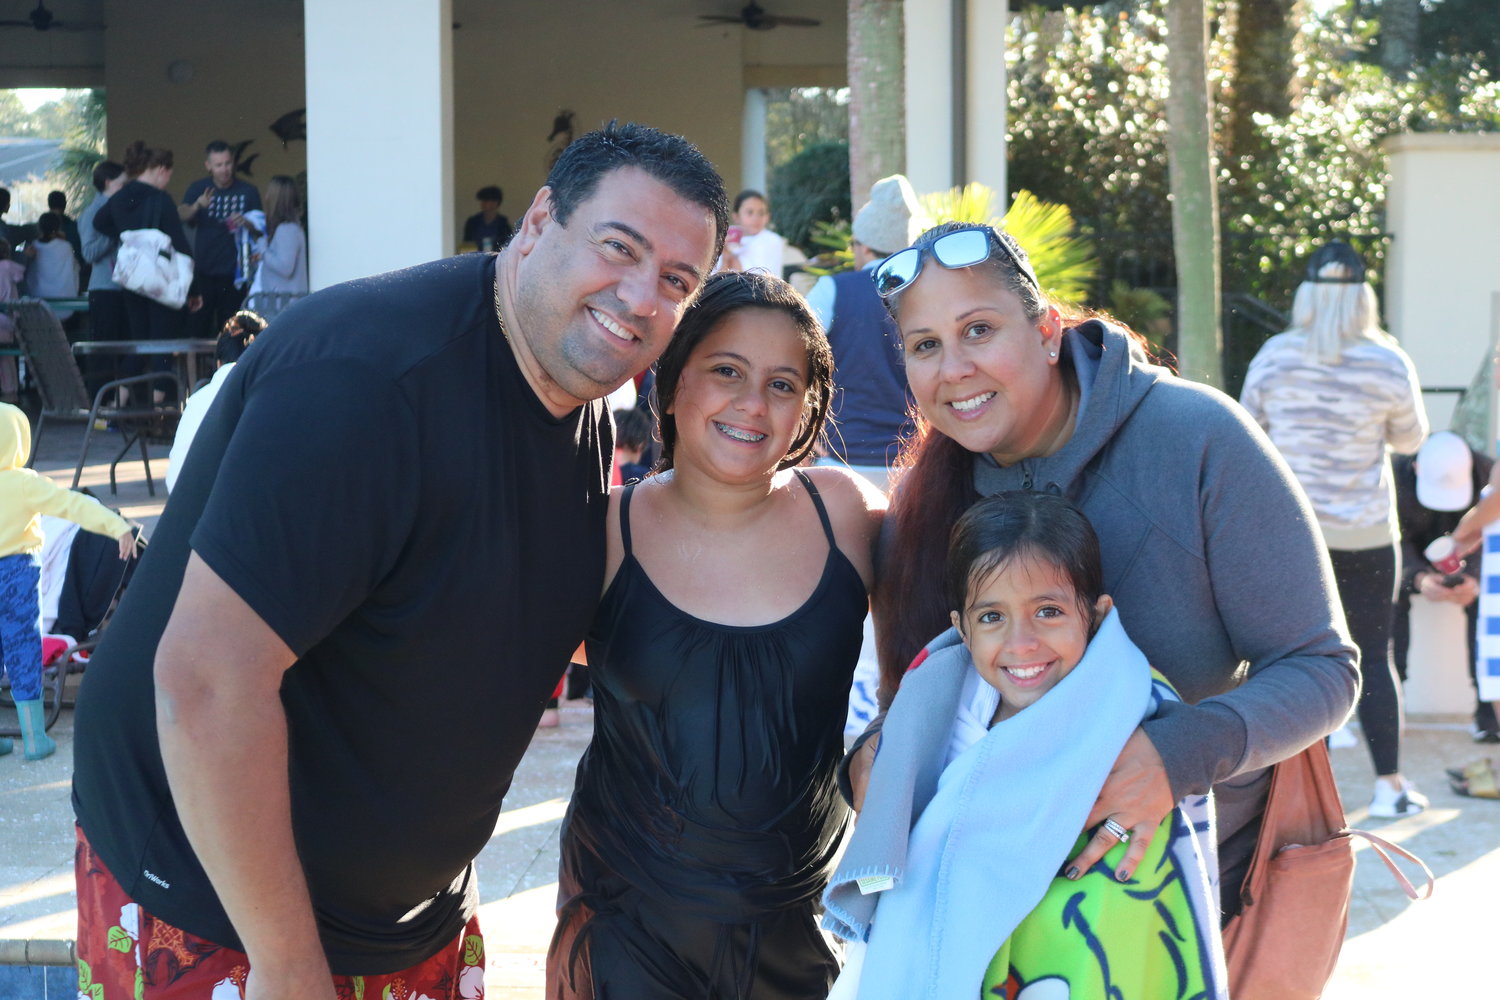 Skylar, Leah, Nicole and John Perri enjoyed the event as a family.